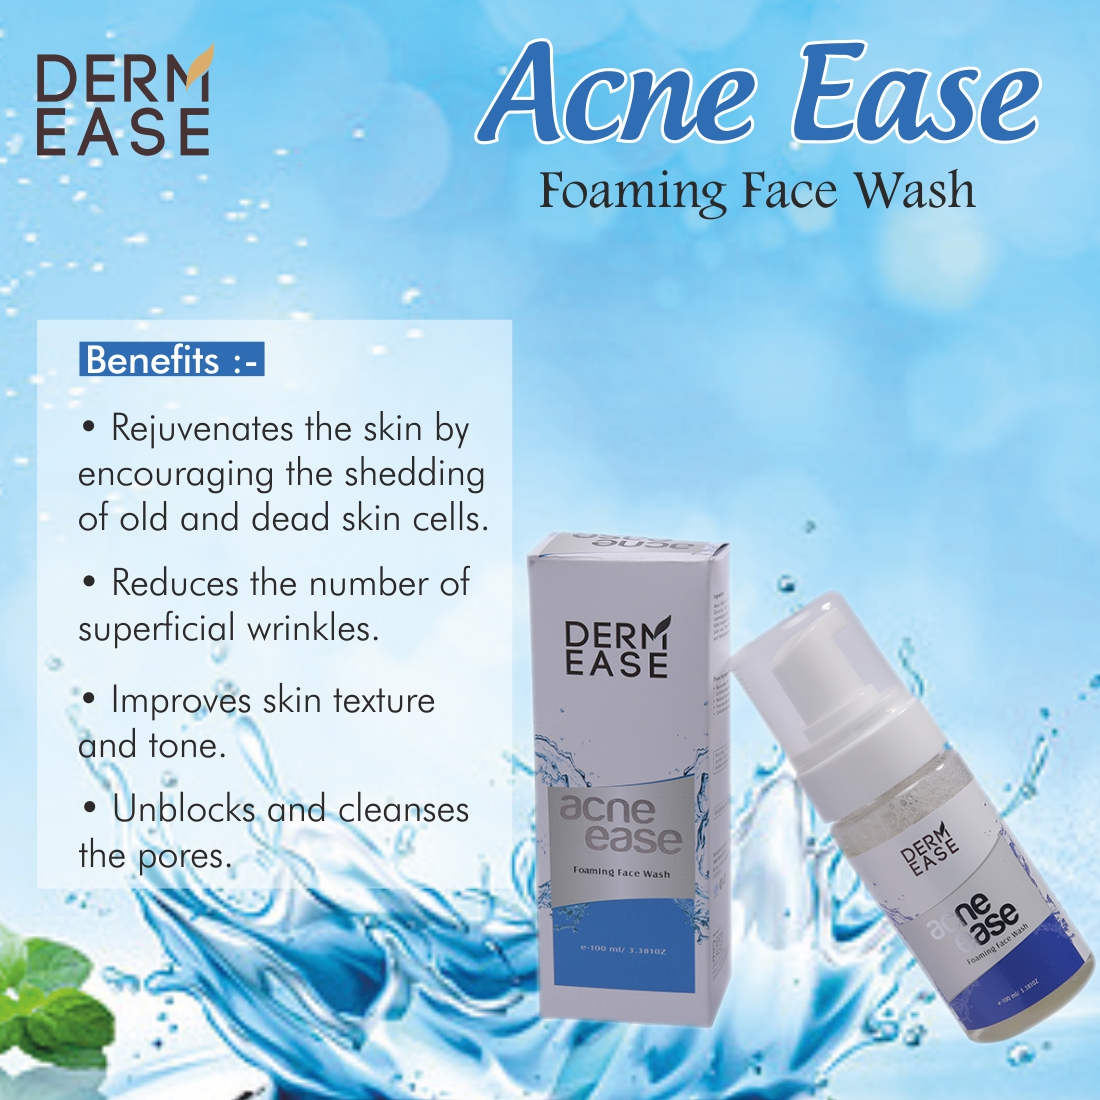 DERM EASE Acne Ease Foaming Face Wash